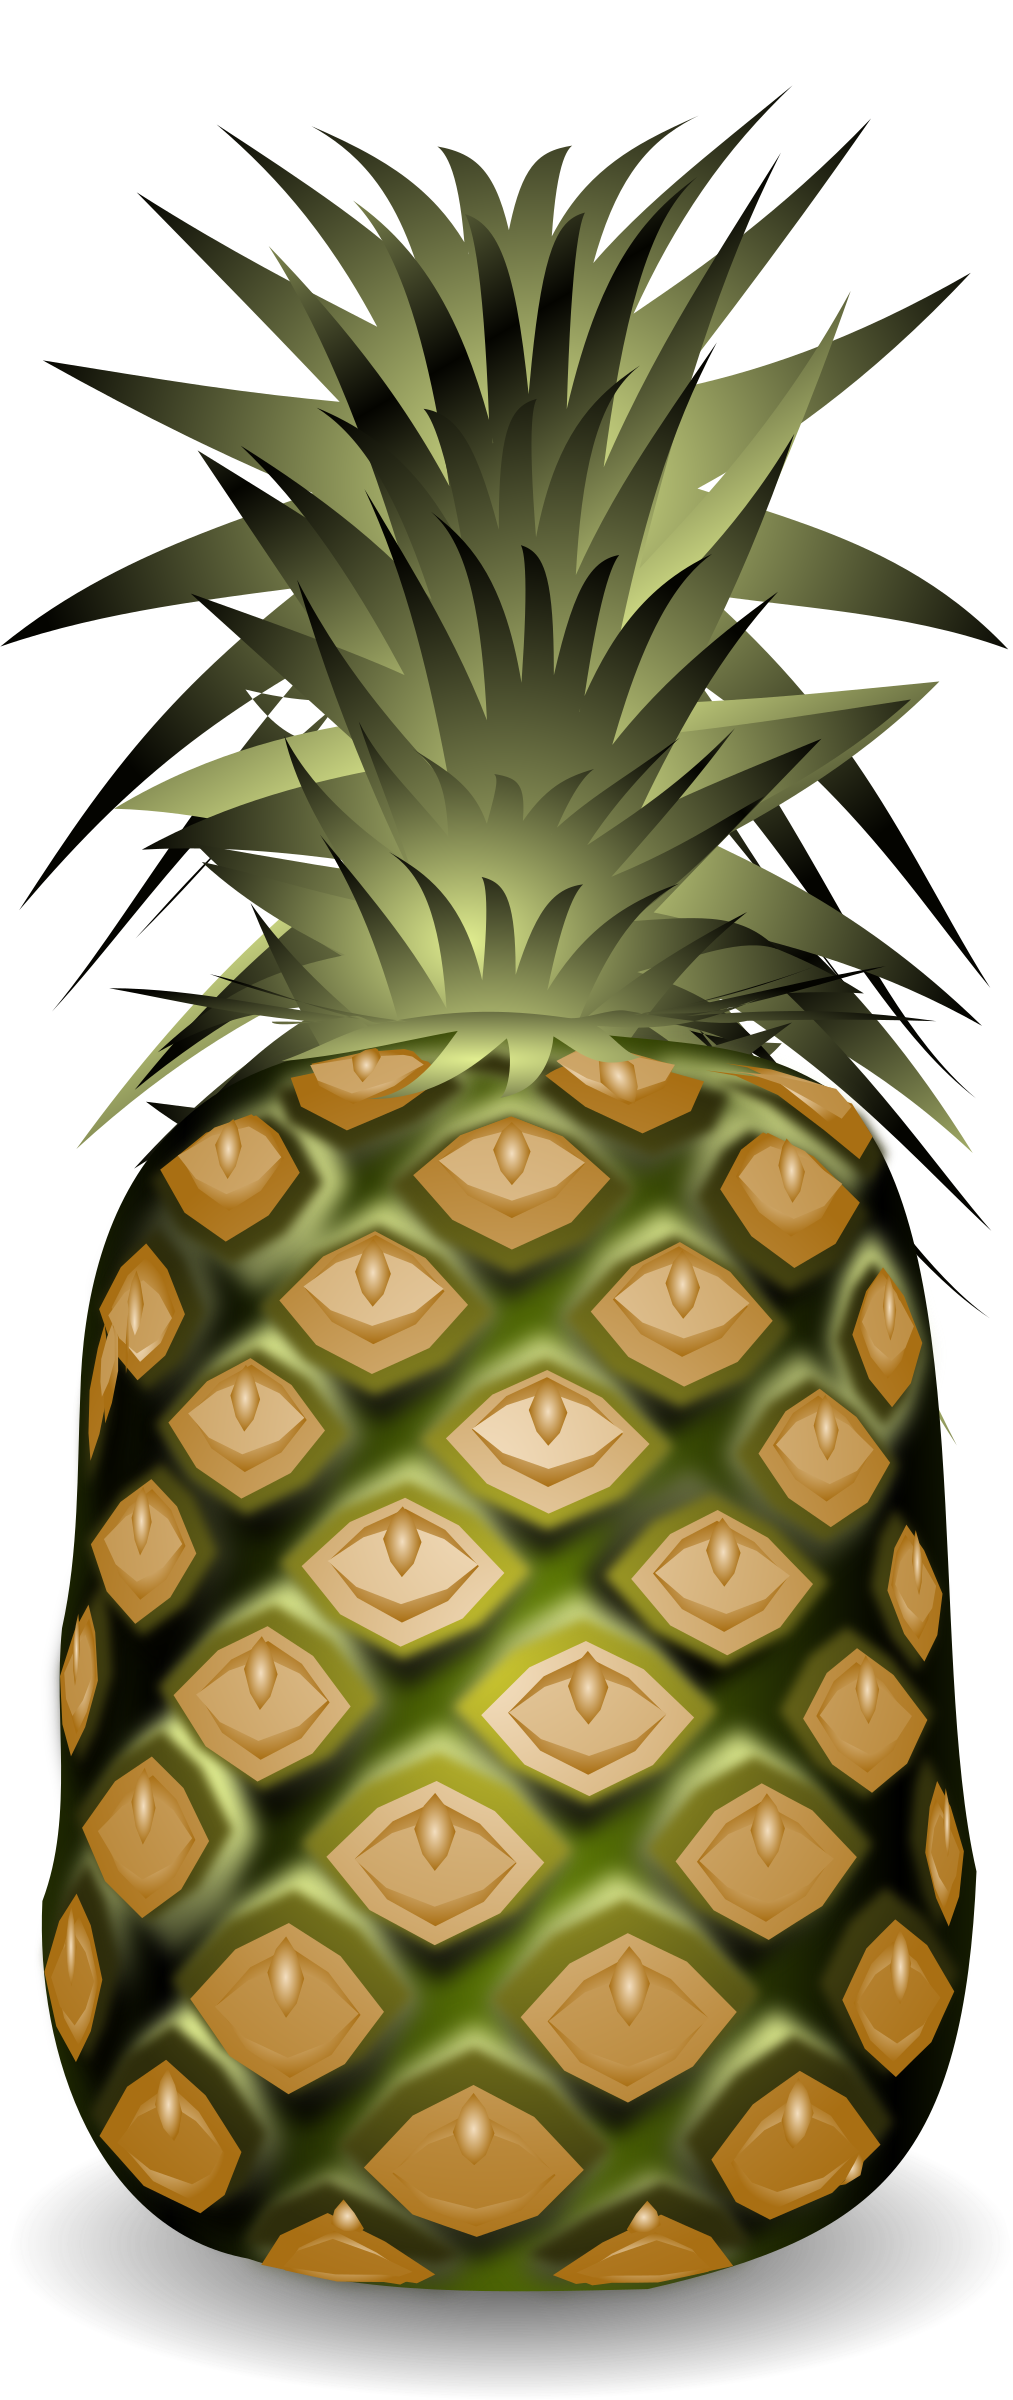 Pineapple Vector Art image - Free stock photo - Public Domain photo